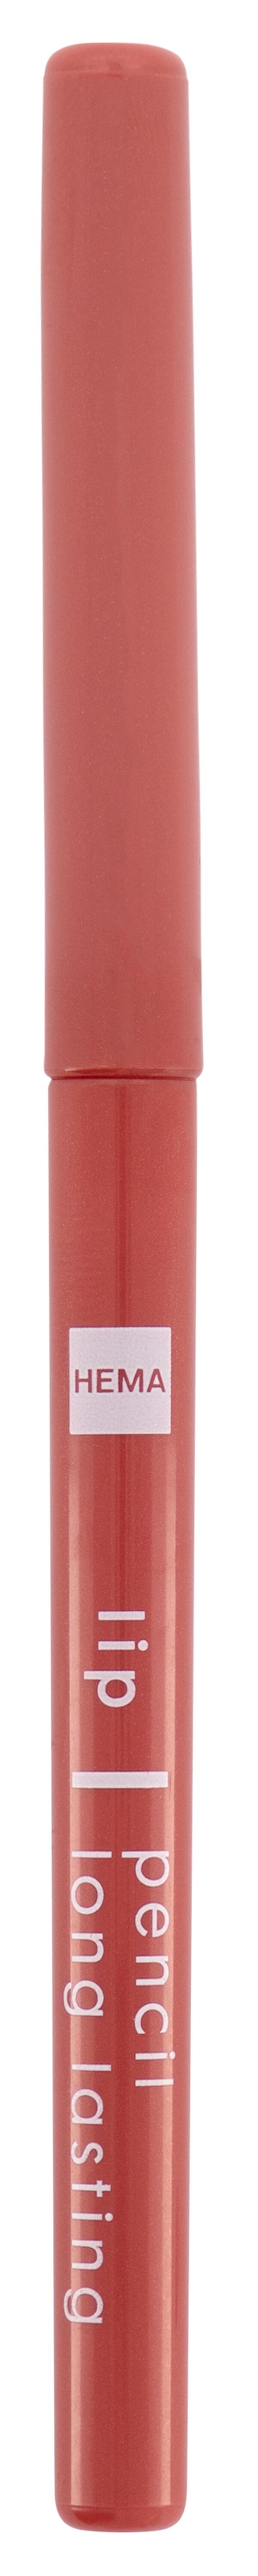 crayon à lèvres rose - 11230128 - HEMA